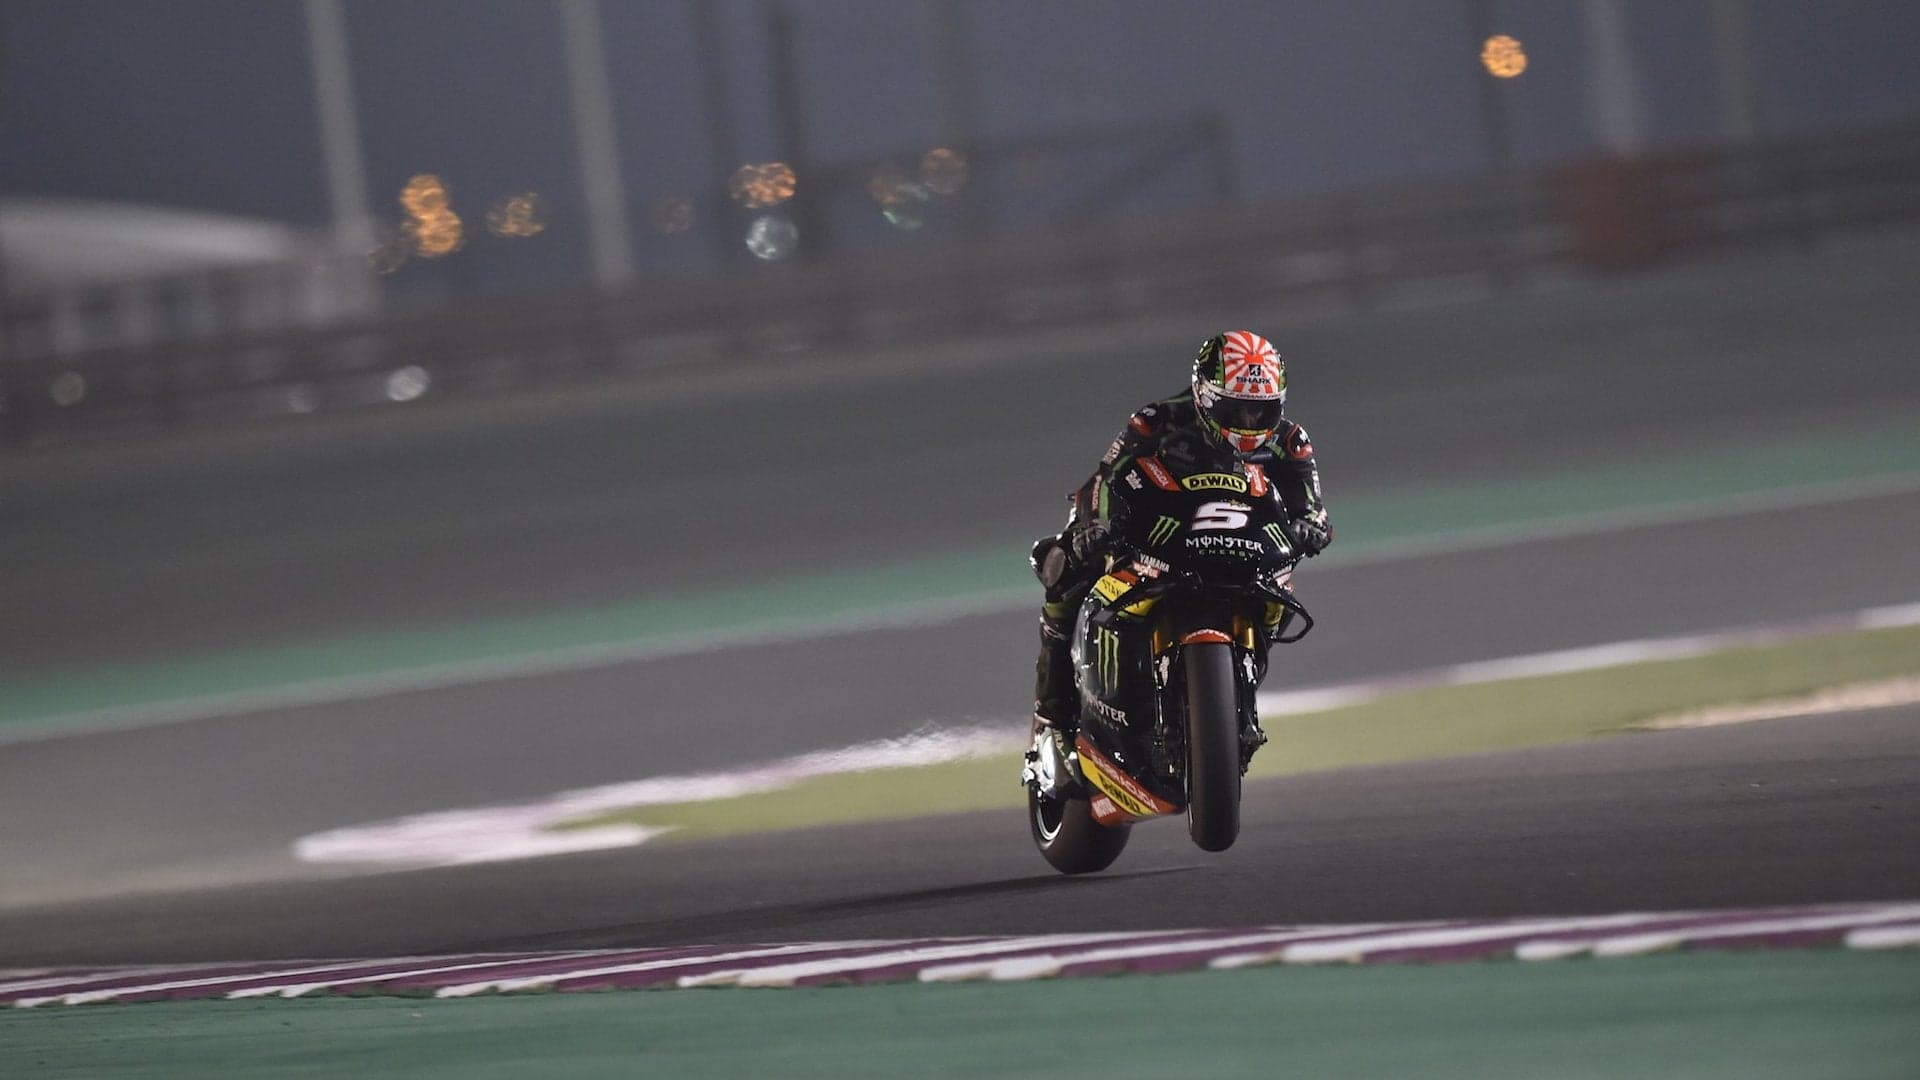 Johann Zarco Claims Pole Position for the 2018 MotoGP Grand Prix of Qatar